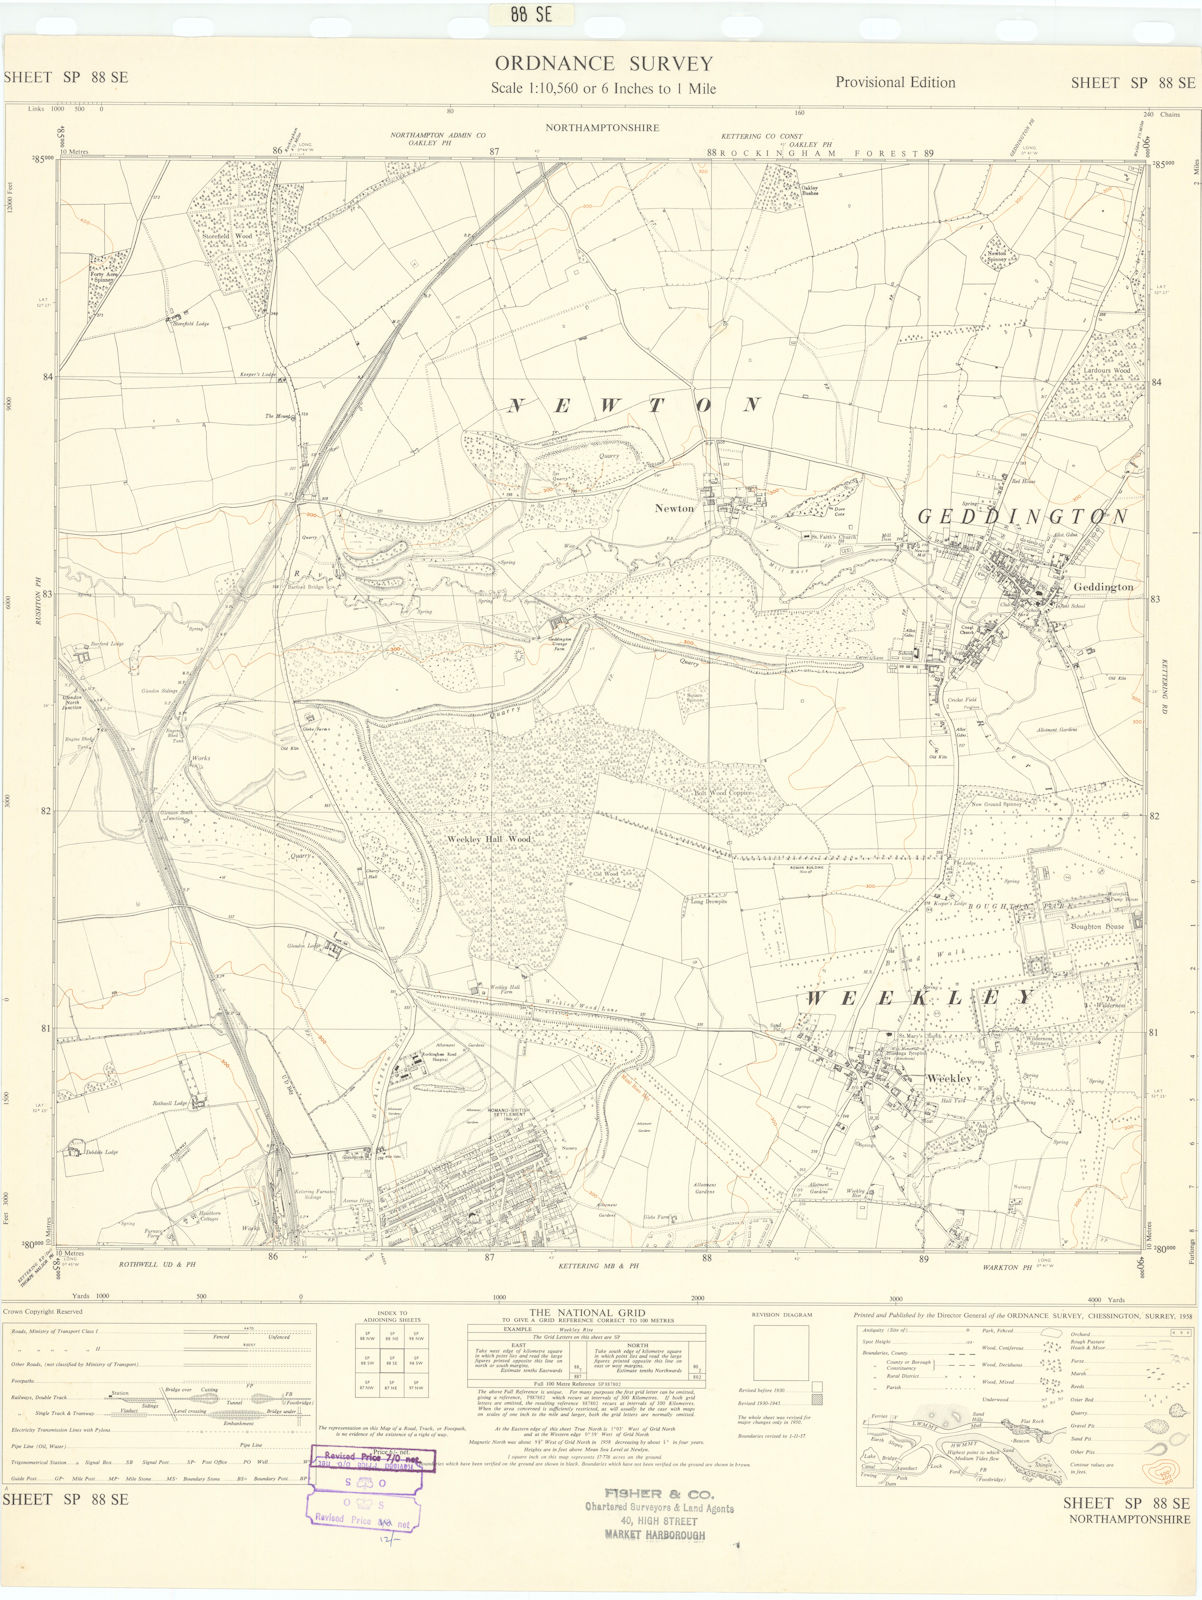 Ordnance Survey SP88SE Northamptonshire Kettering Geddington Weekley 1958 map